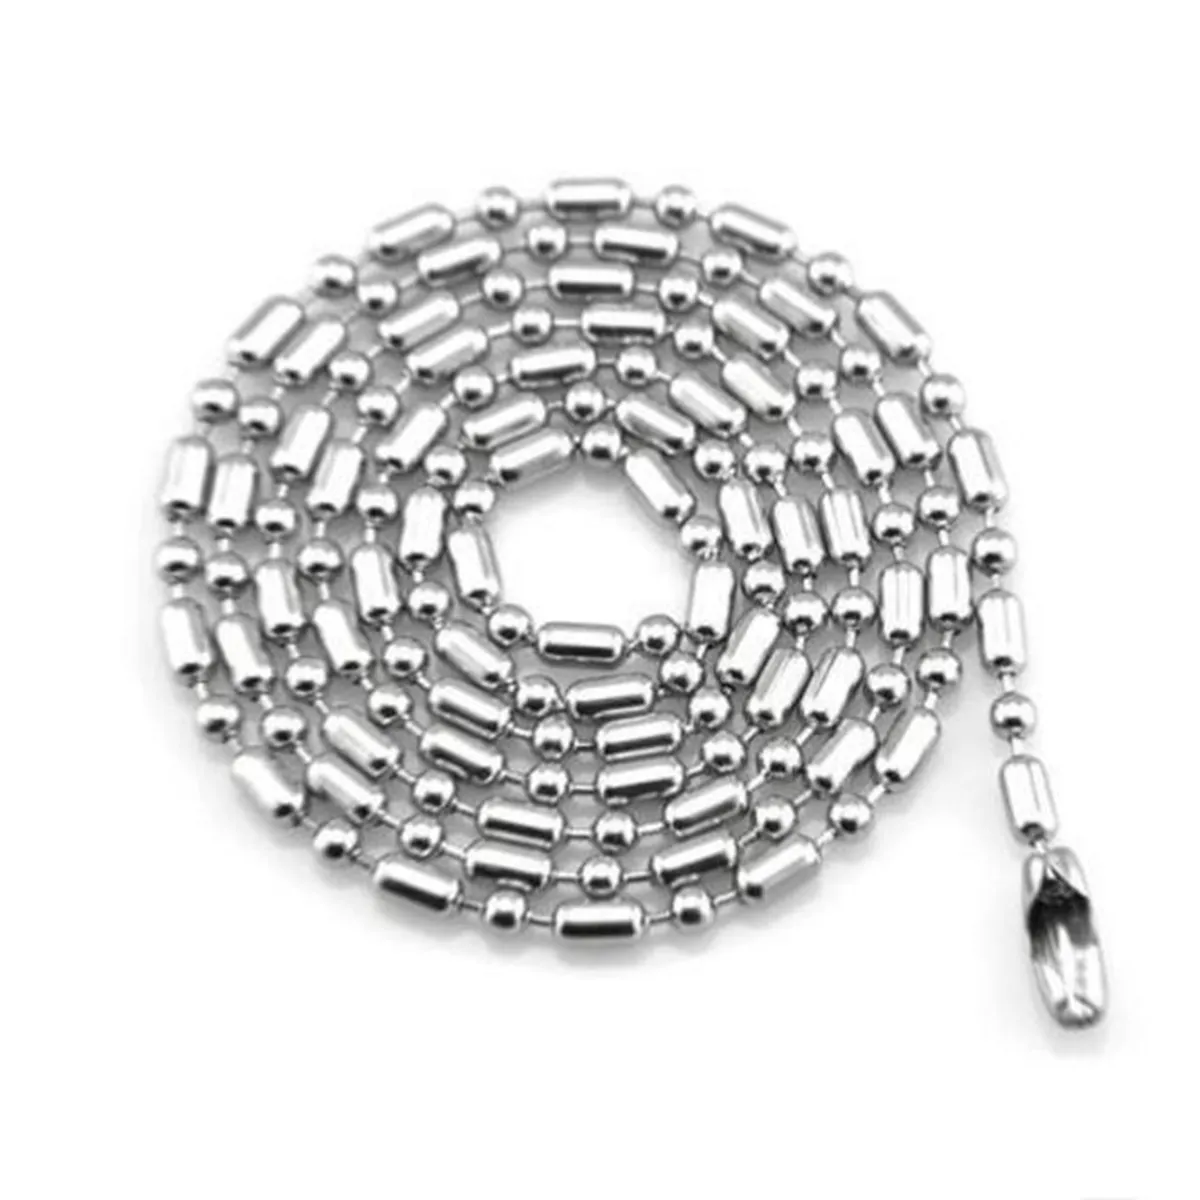 50pcs/lot 10/12/15CM 2.4mm Ball Chain Bead Chains Fits Key Ring